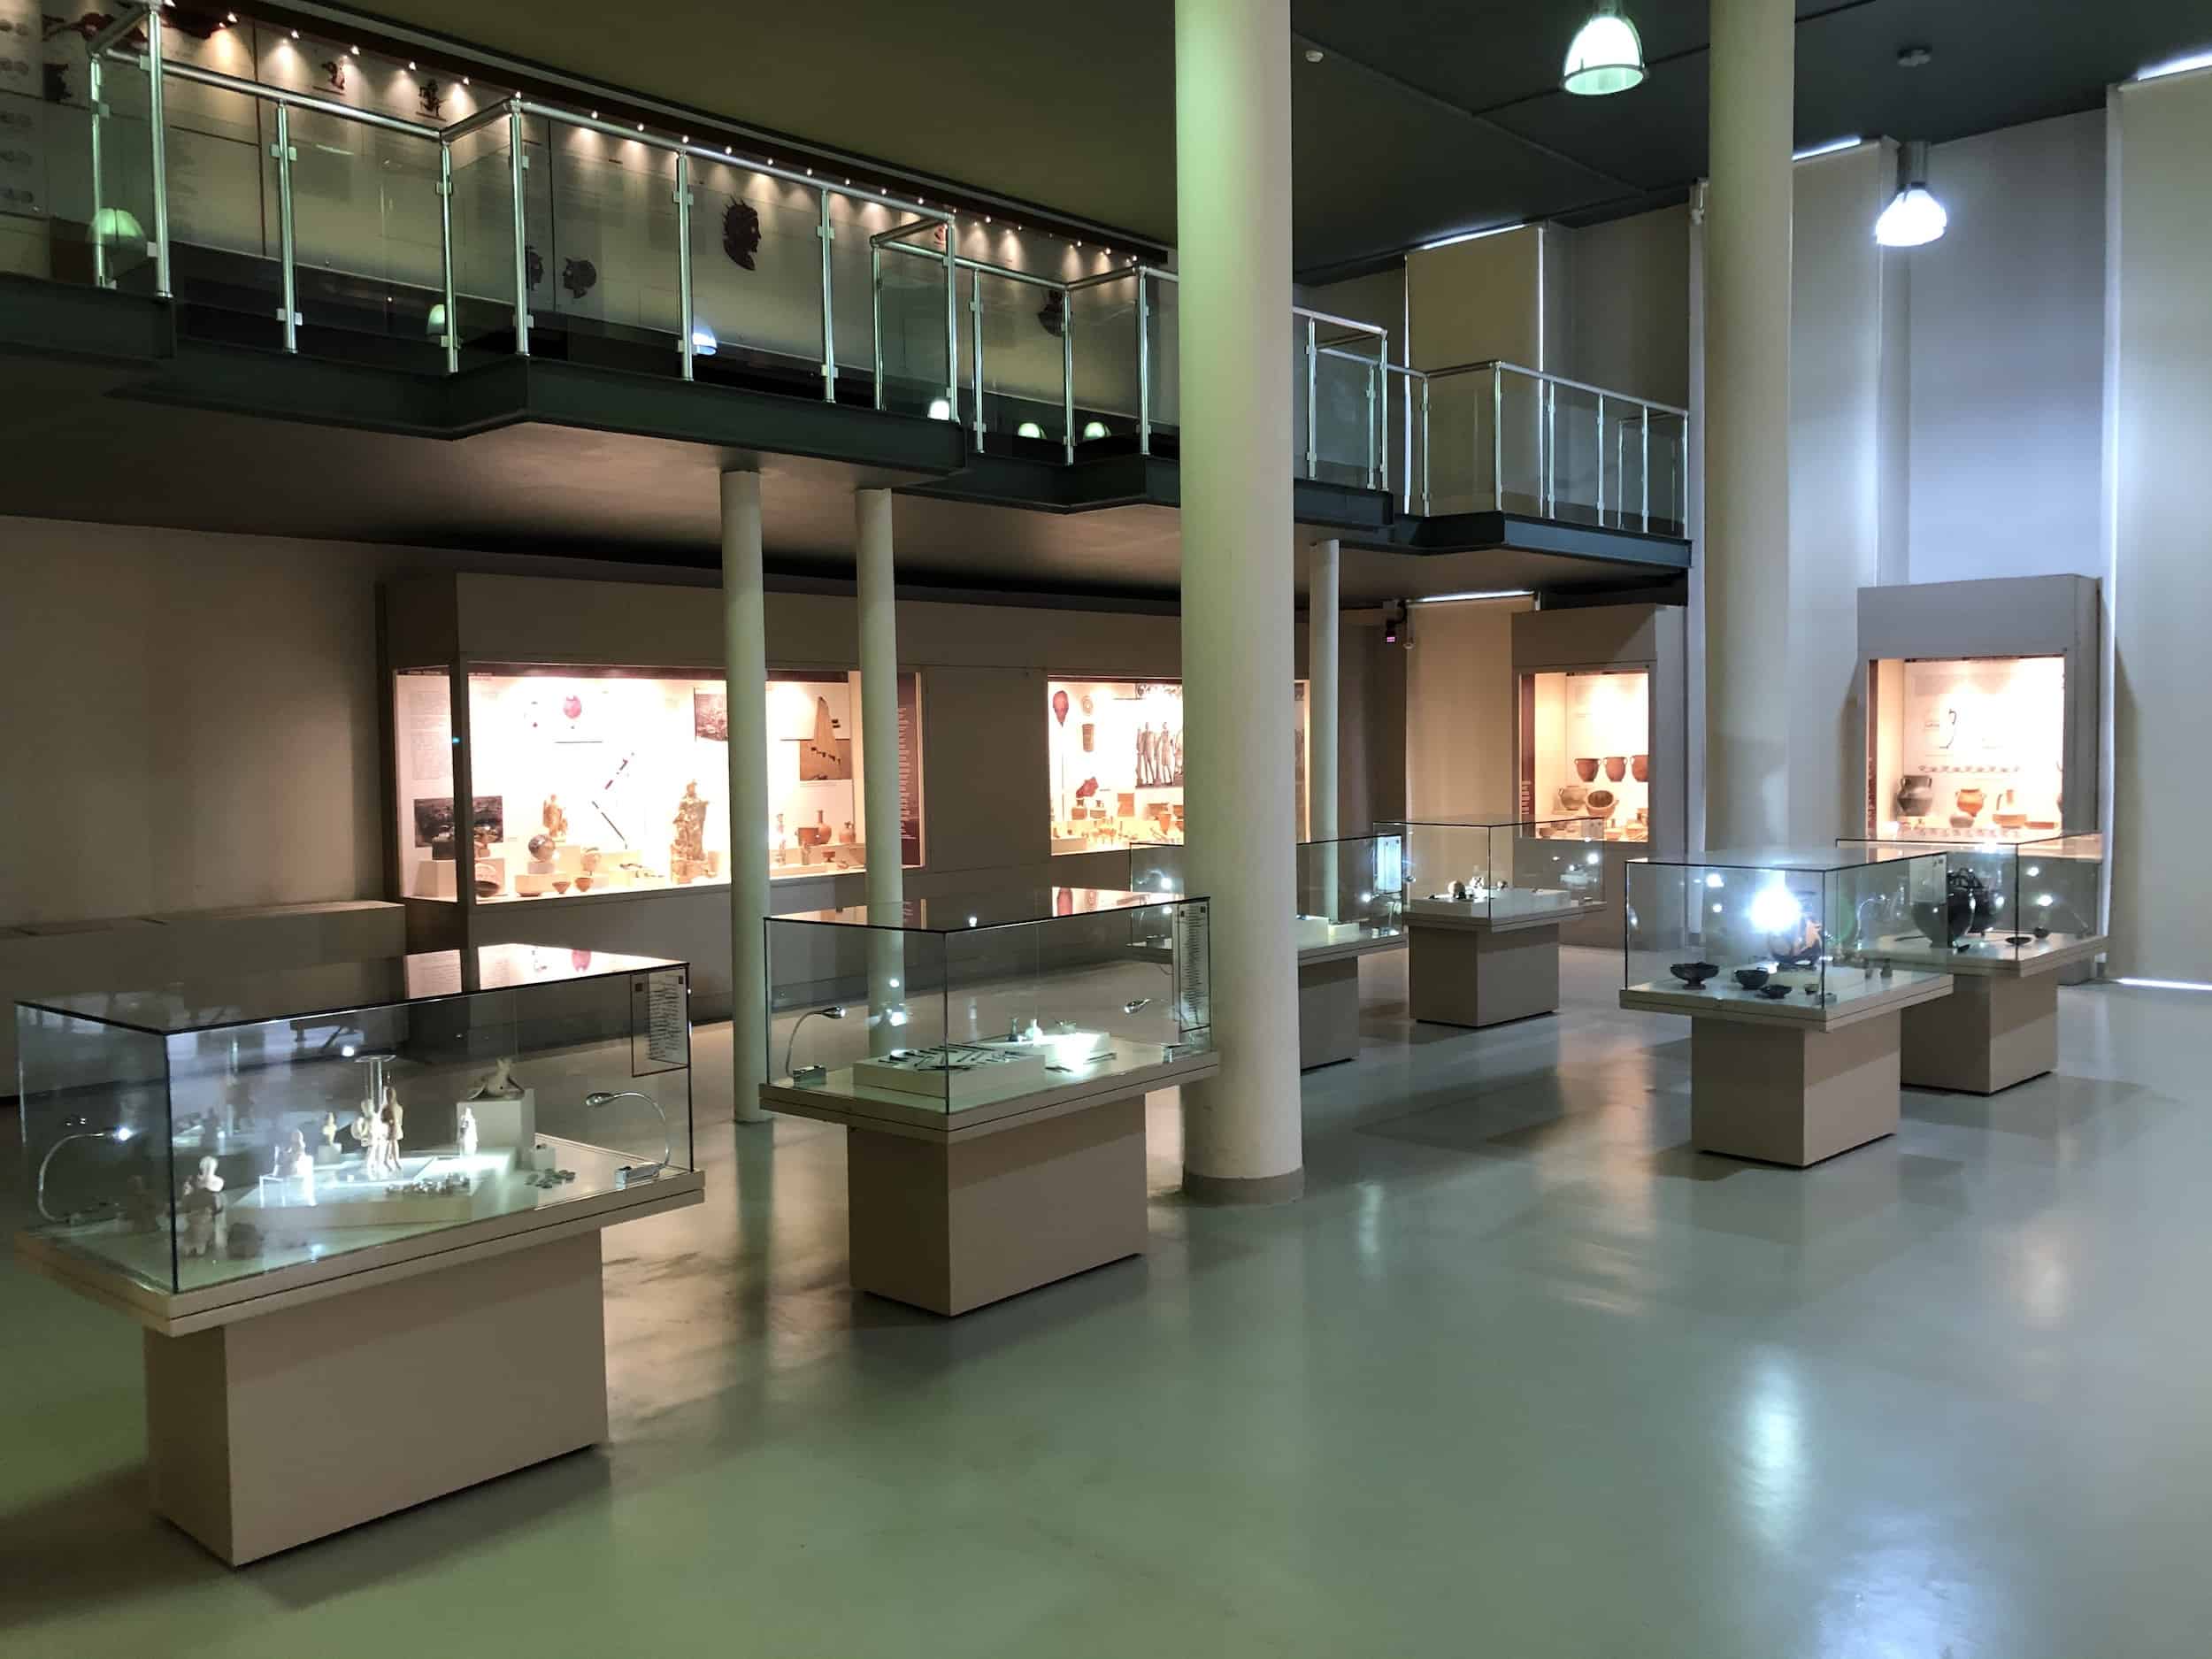 Hall II at the Bursa Archaeological Museum in Bursa, Turkey